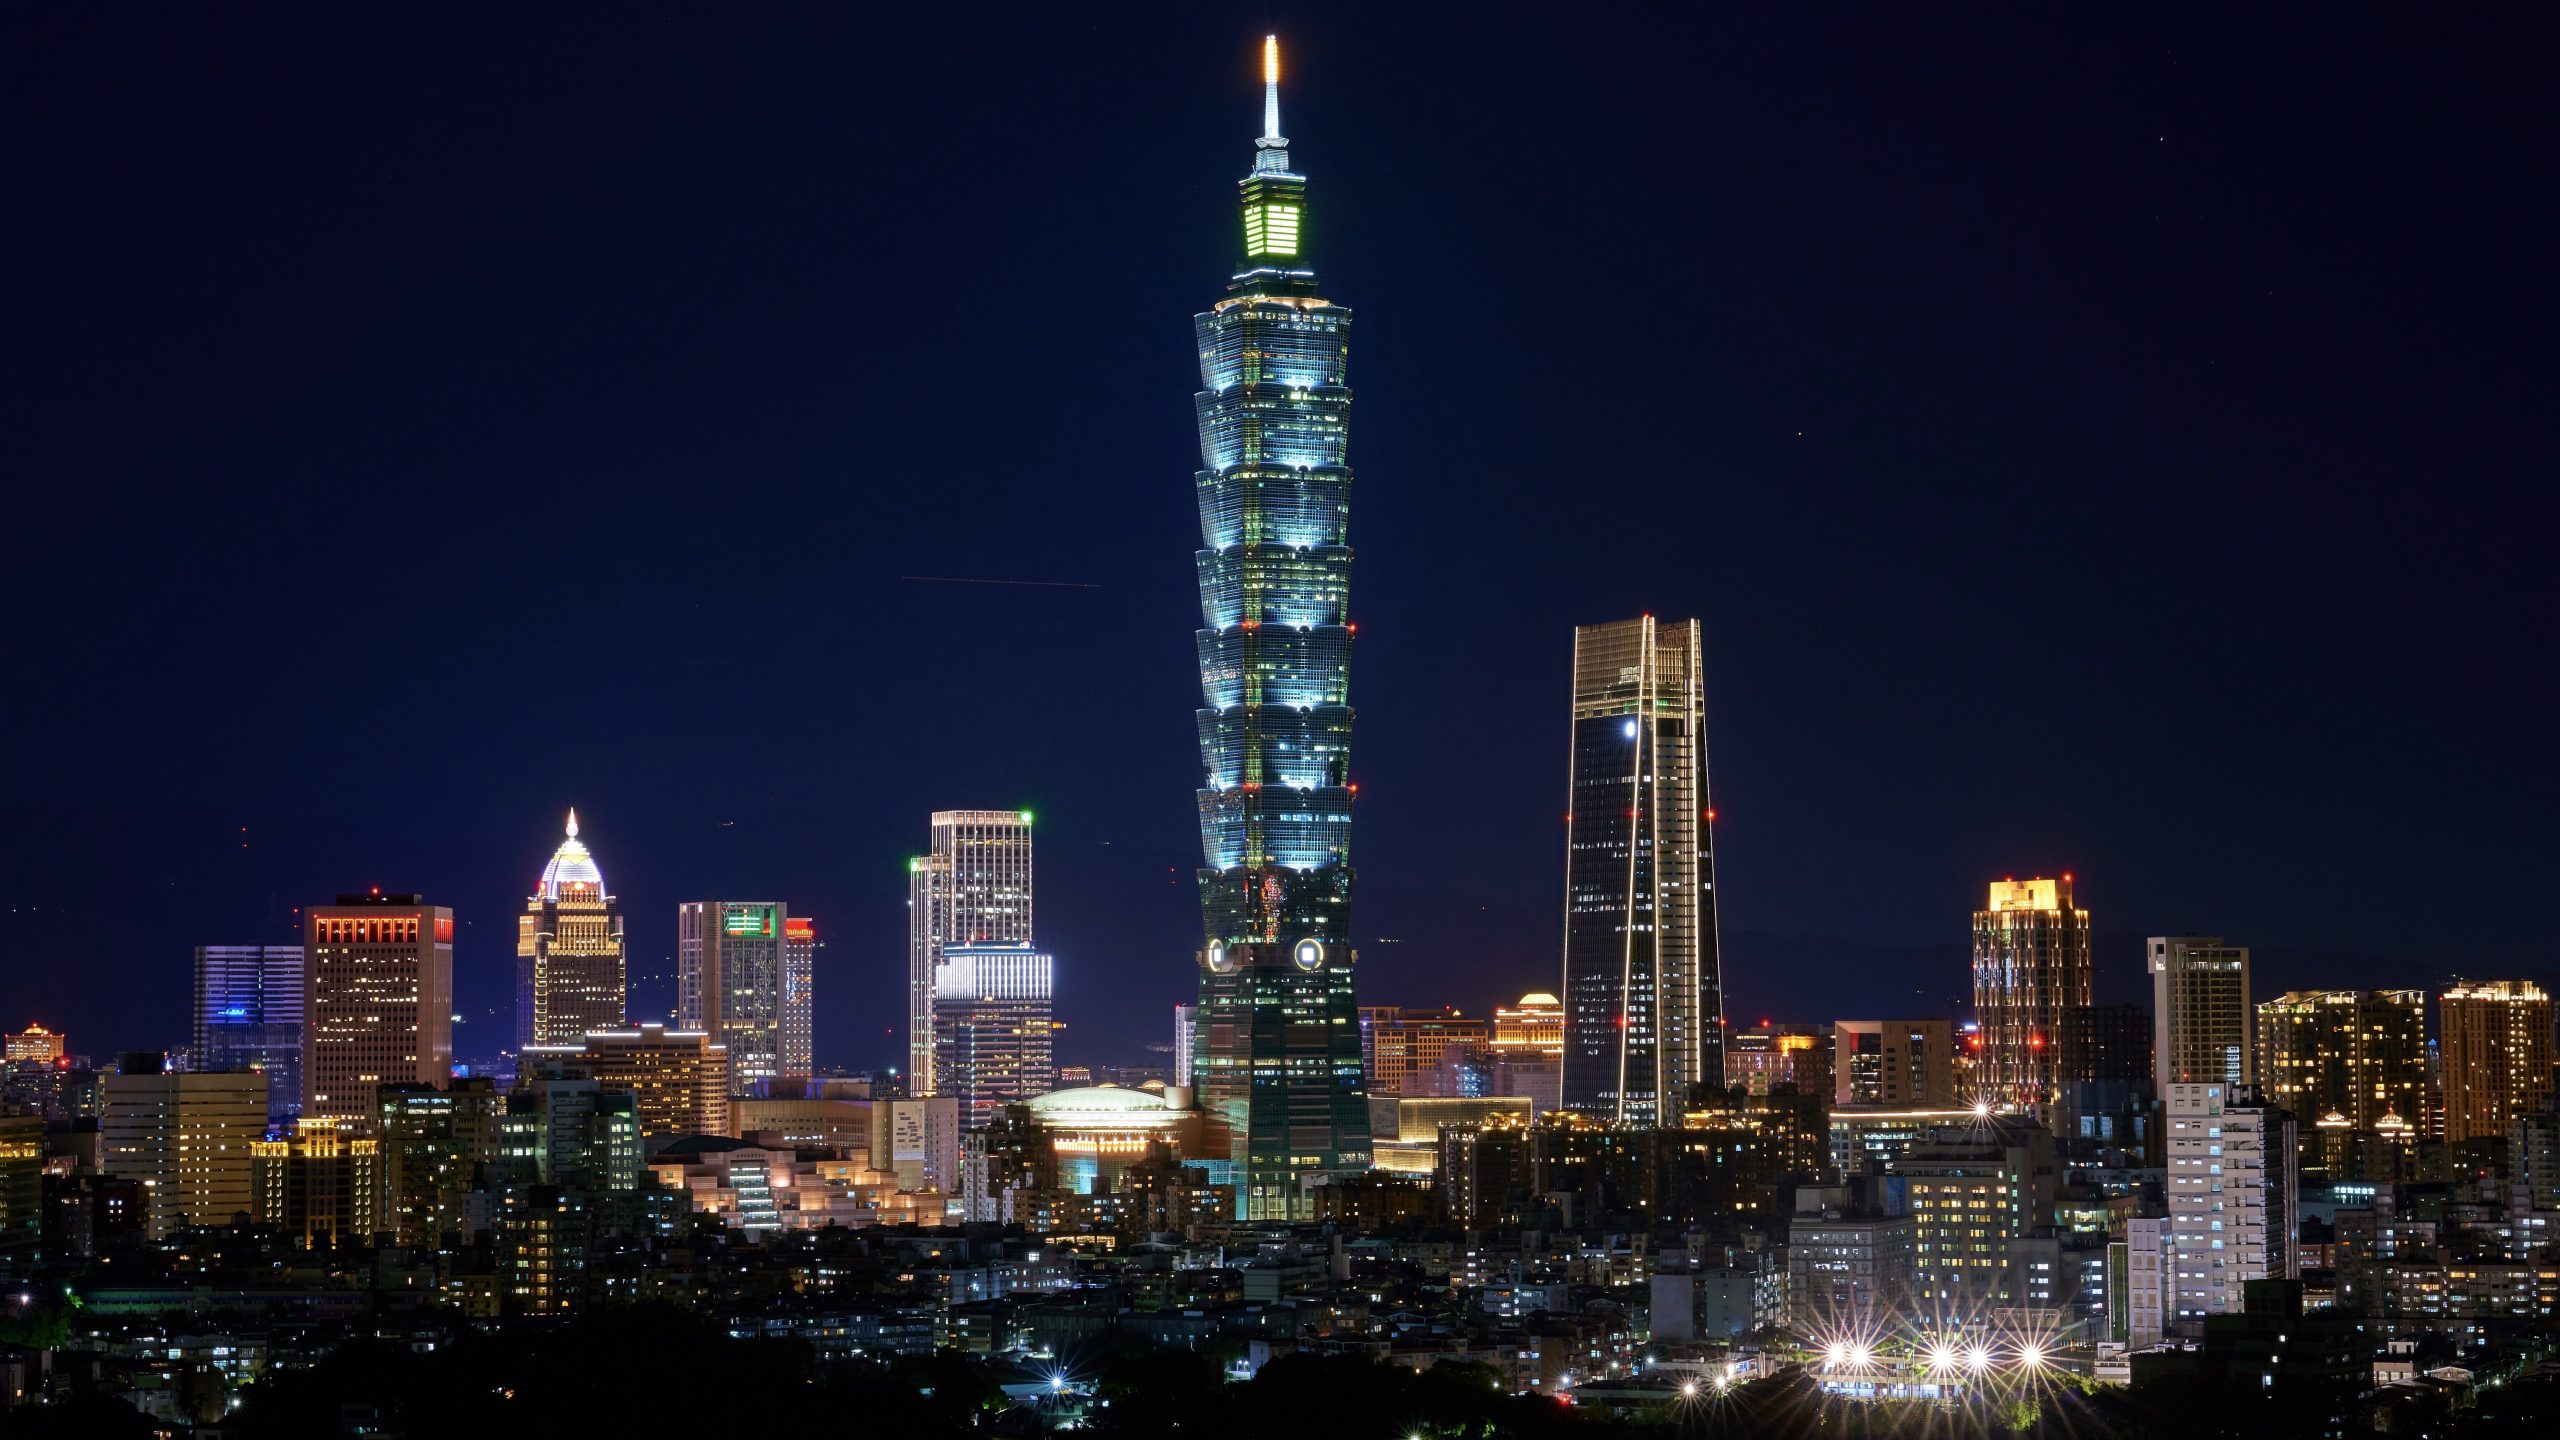 Taipei 101, Taiwan - The Broad Life's featured photo